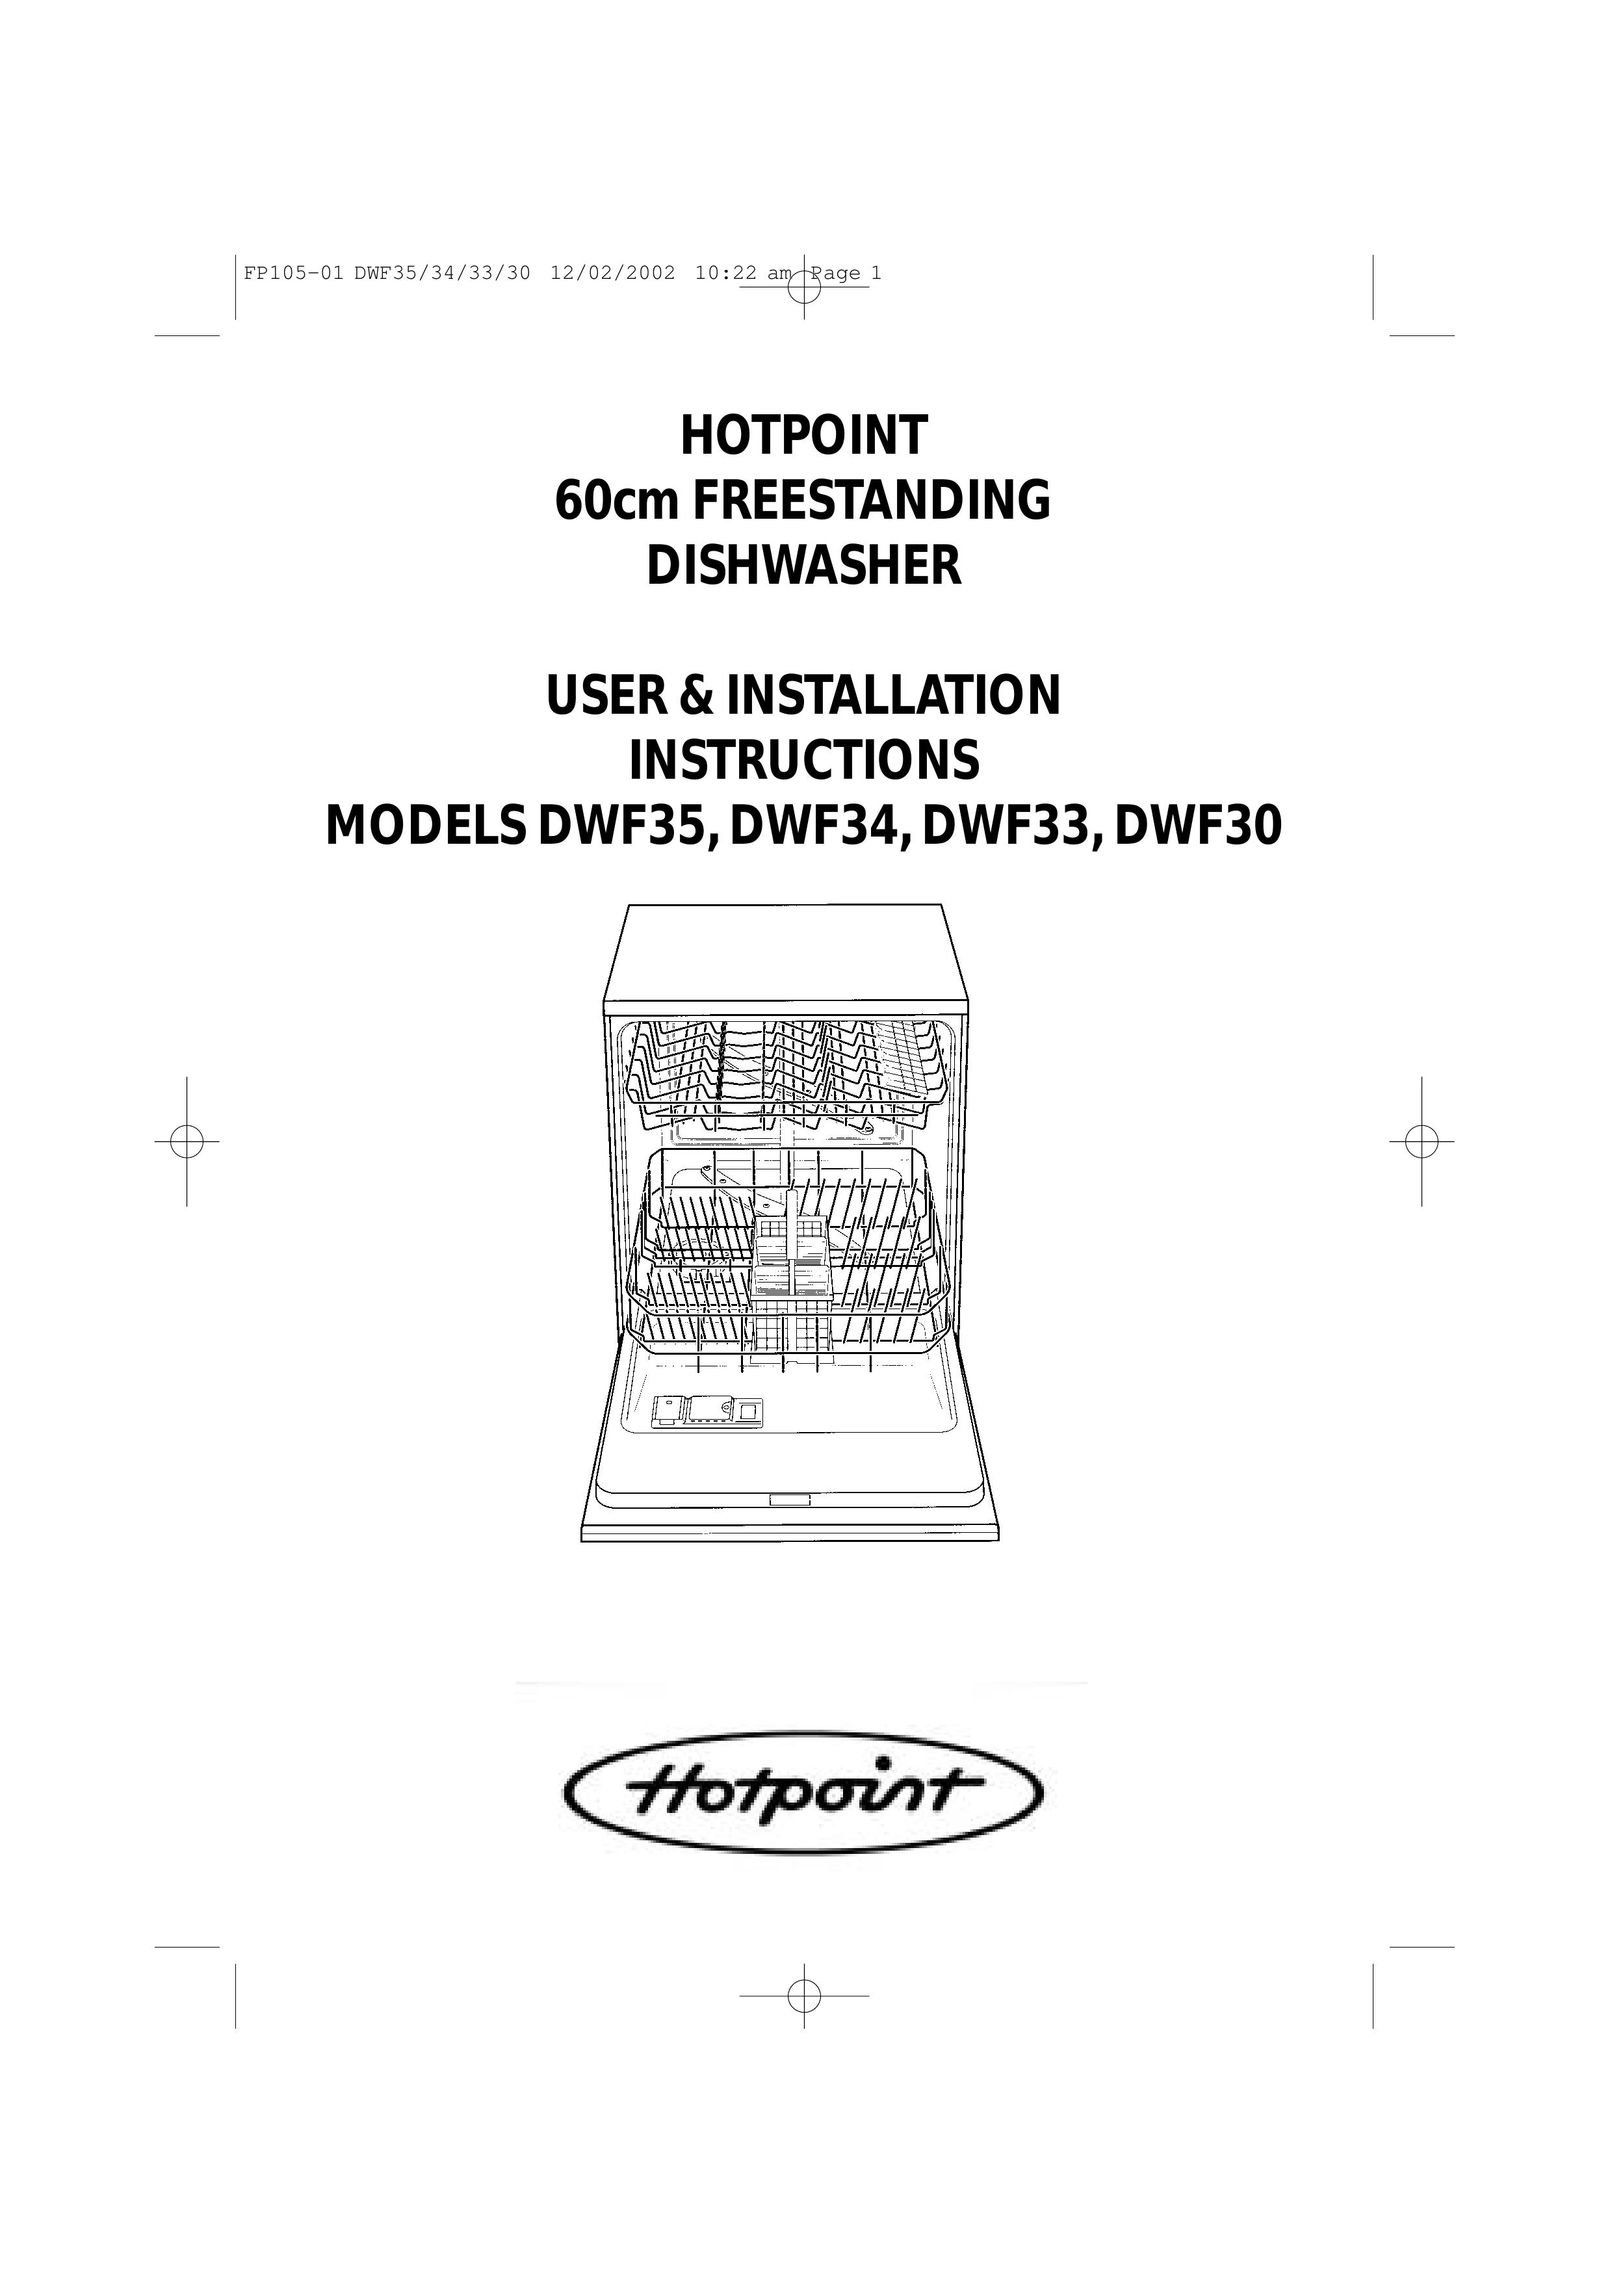 Hotpoint DWF30 Dishwasher User Manual